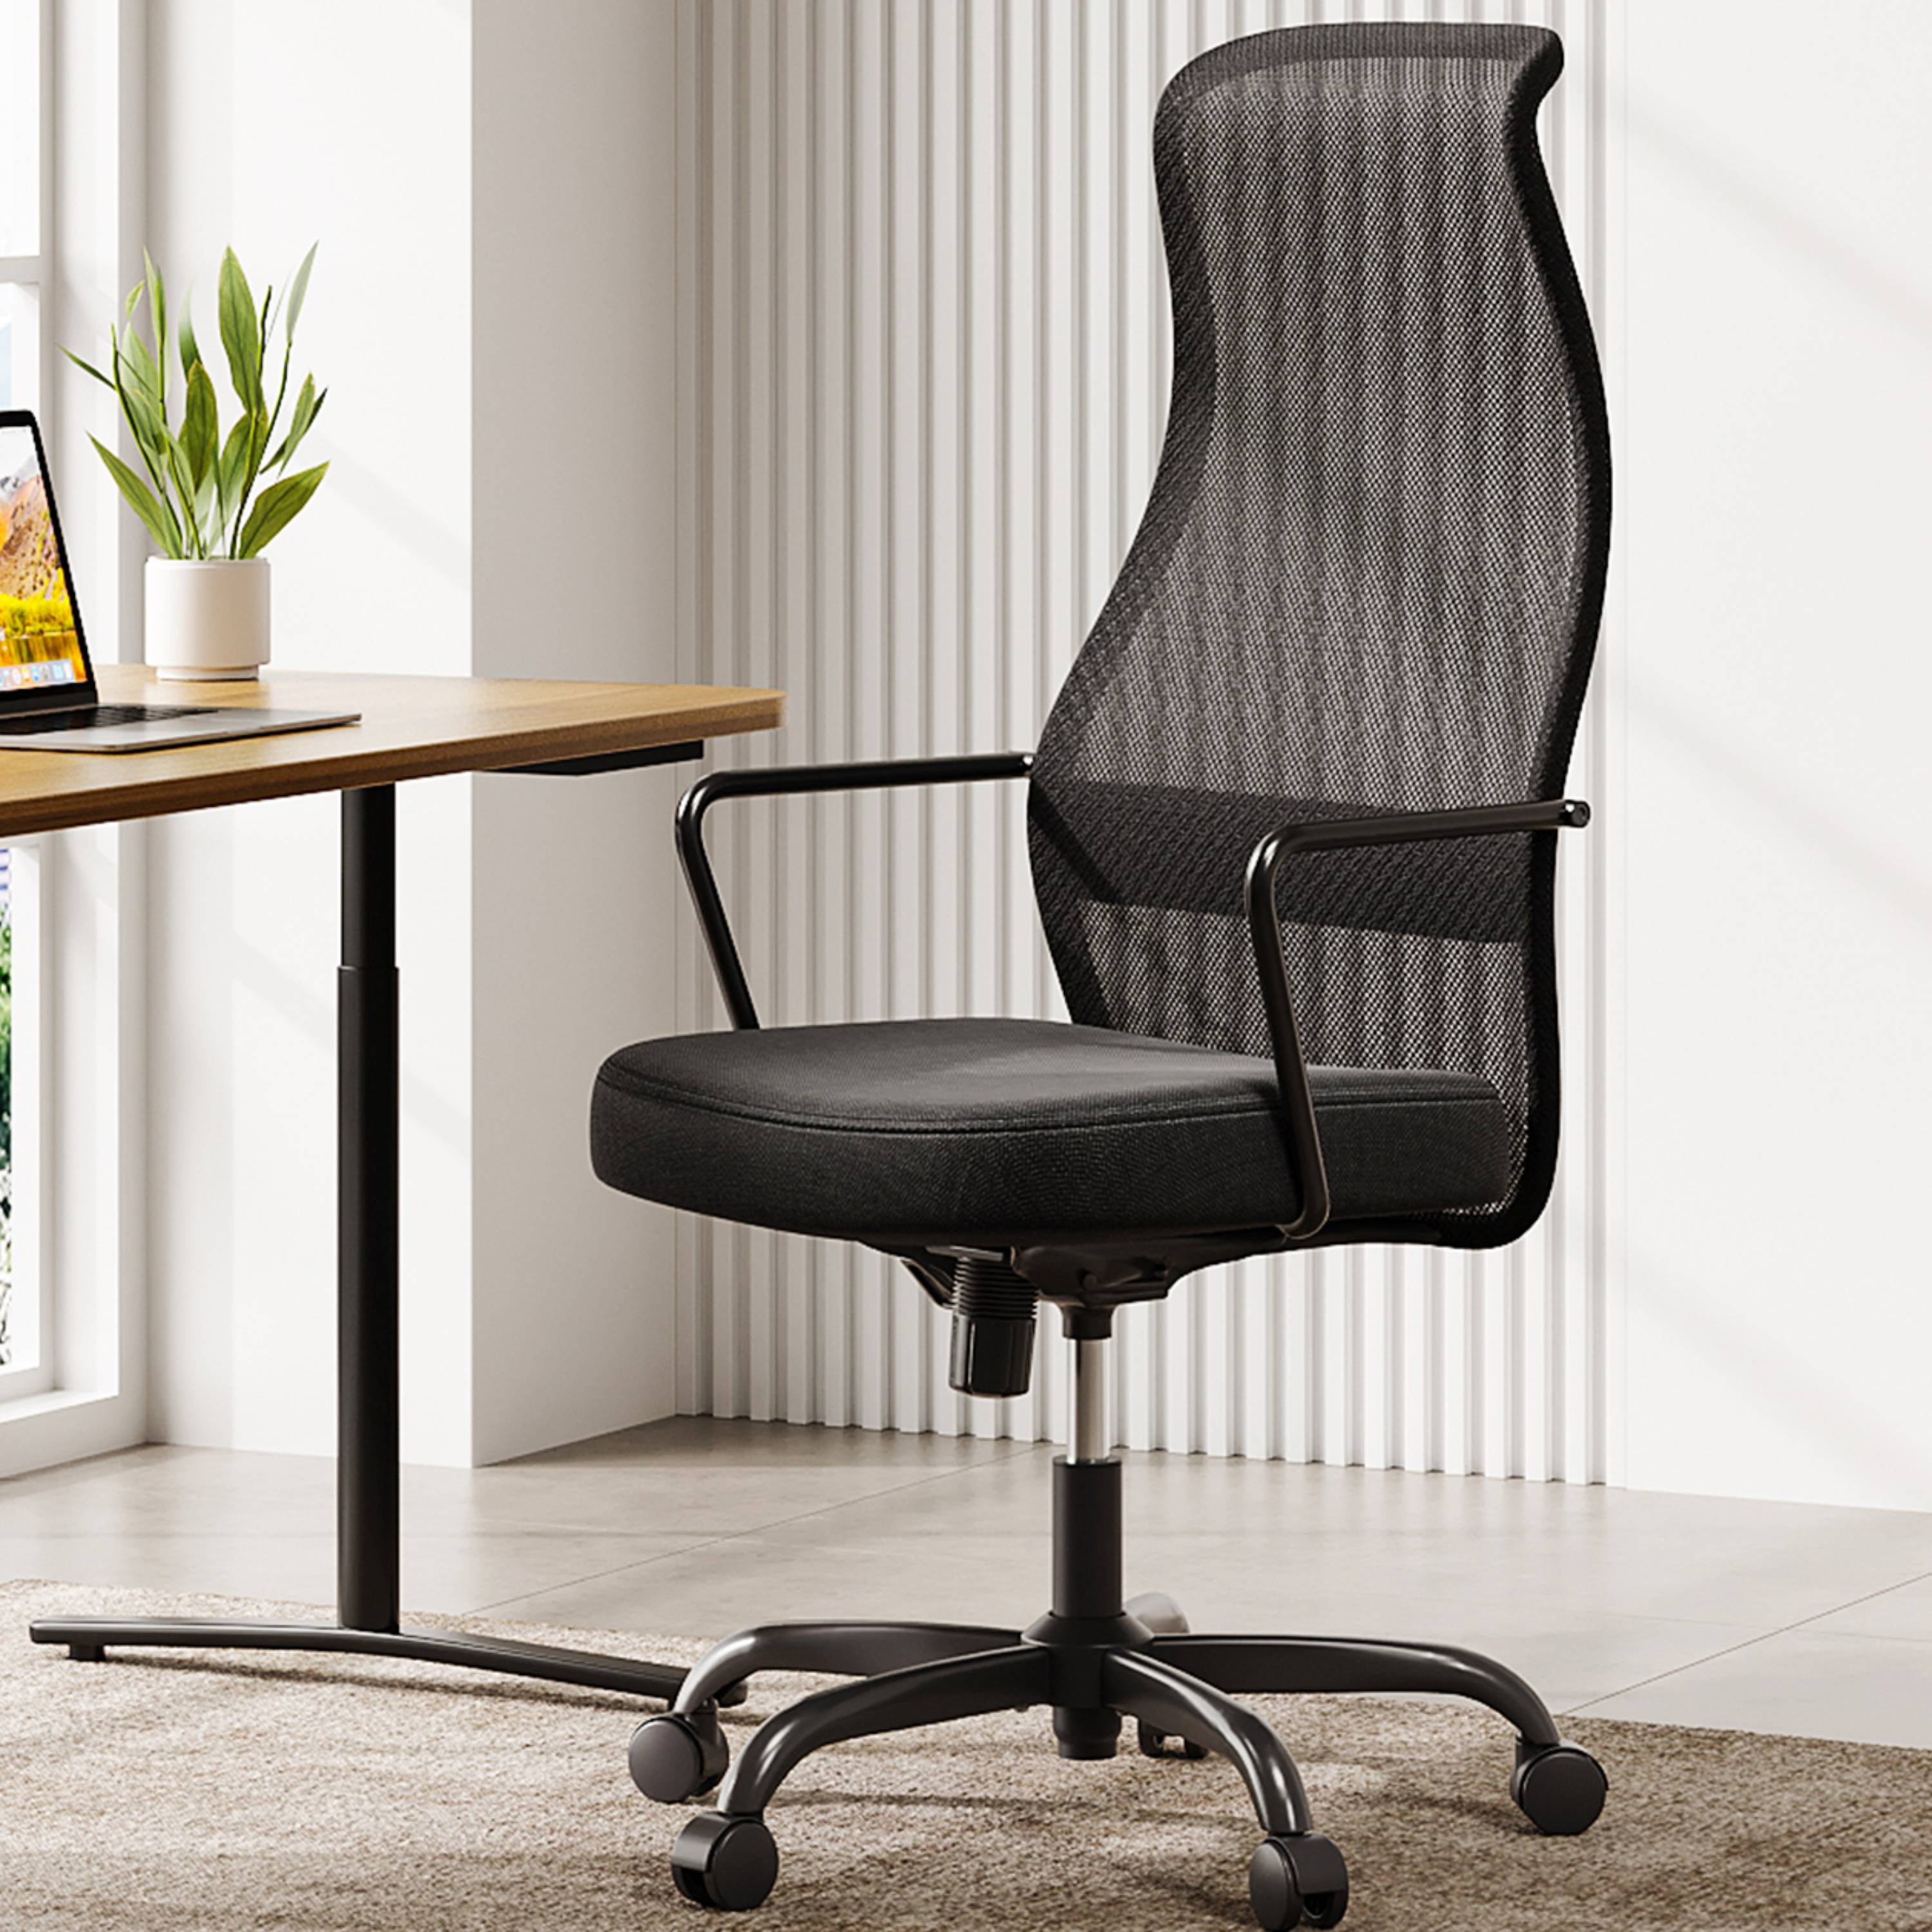 Sihoo Modern Best Quality Full Mesh Ergonomic Office Chair with